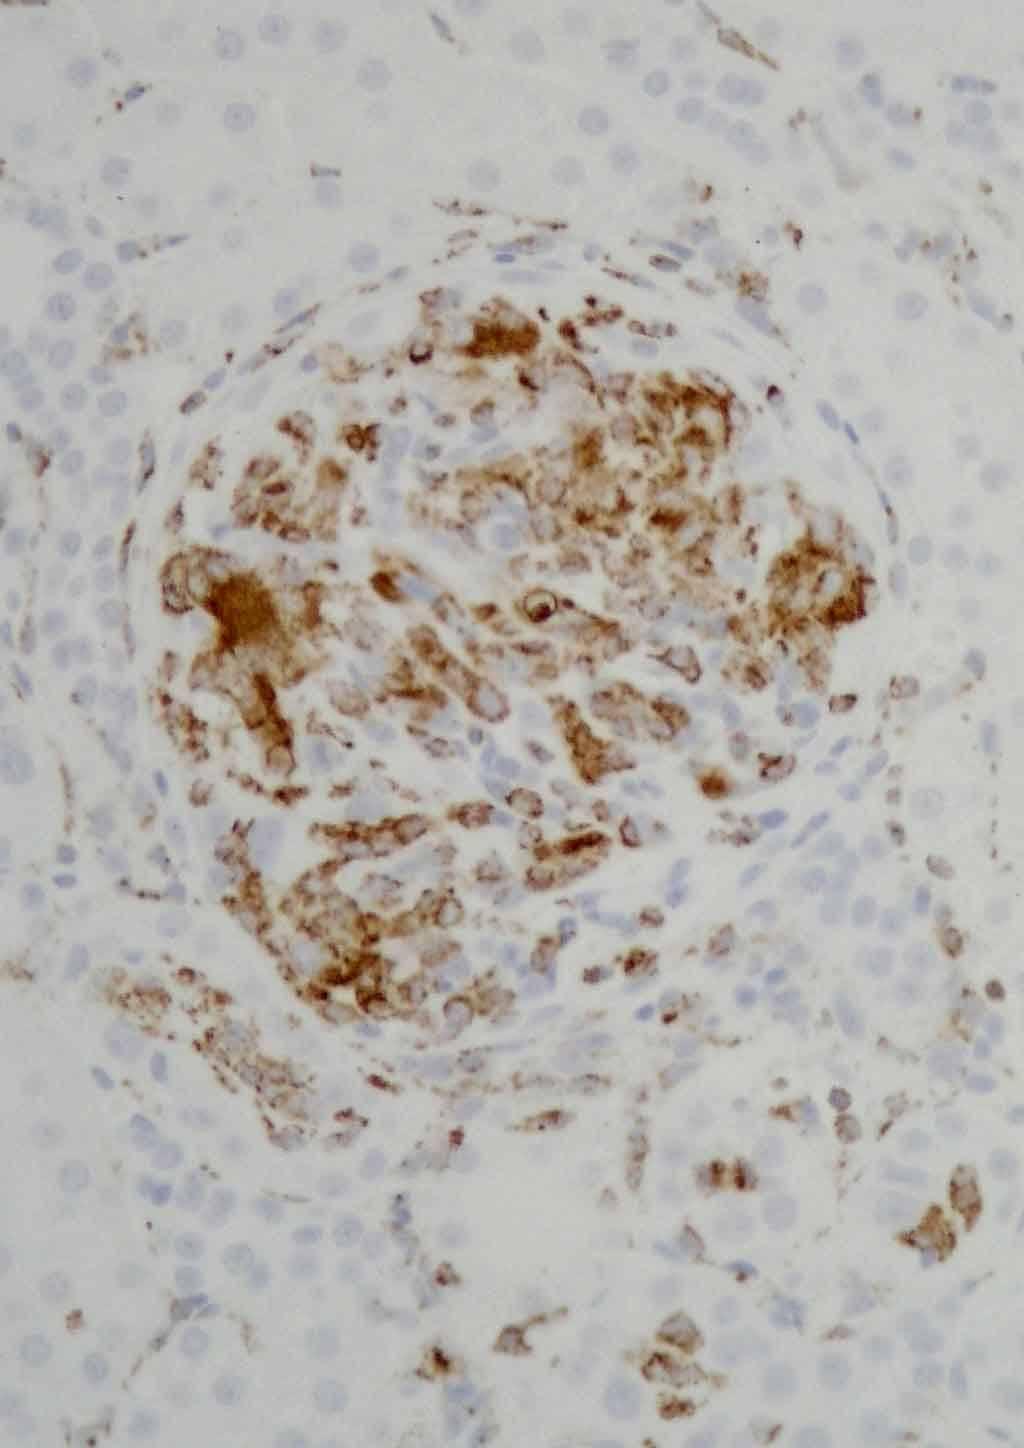 ED1+ cells/ glomerular cross section 40